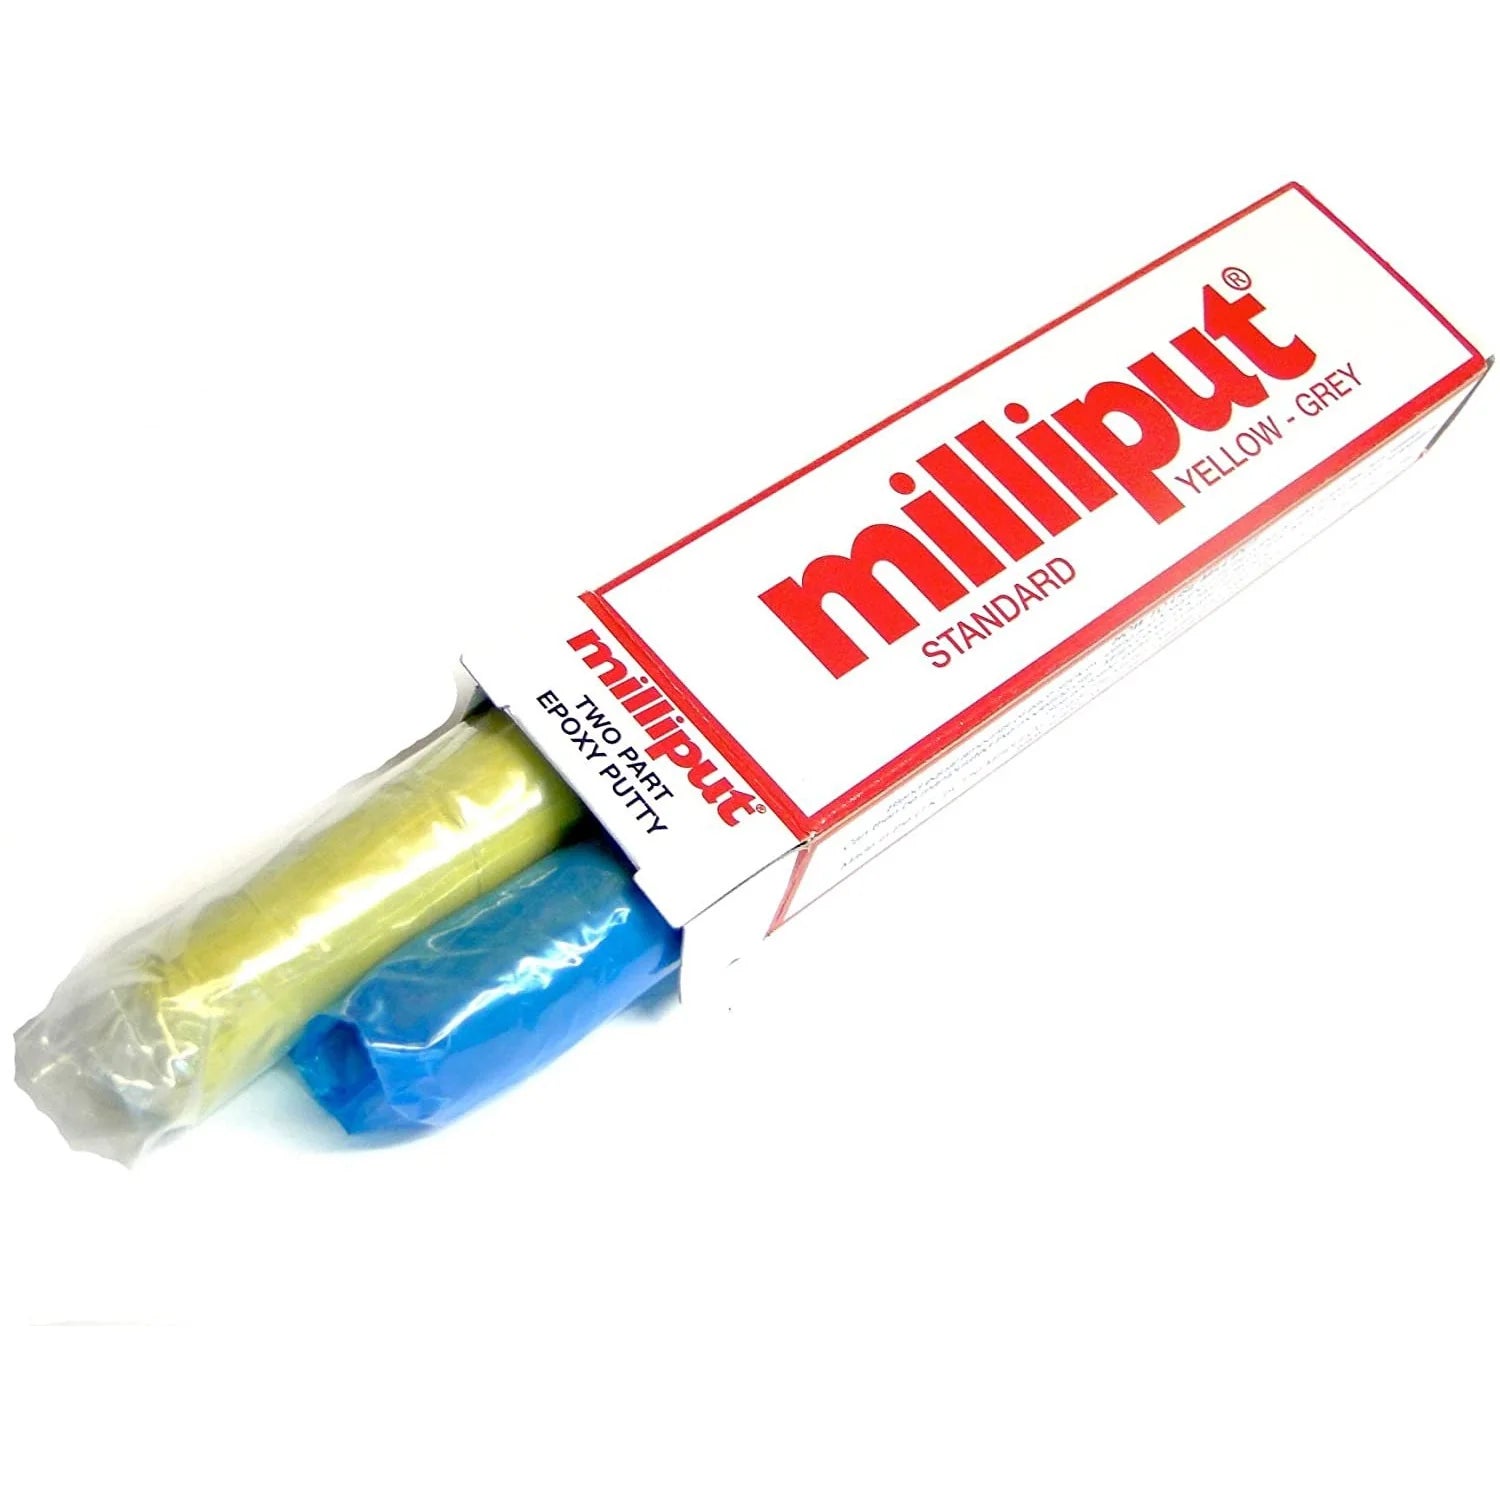 Milliput - Standard Yellow-Grey | Event Horizon Hobbies CA